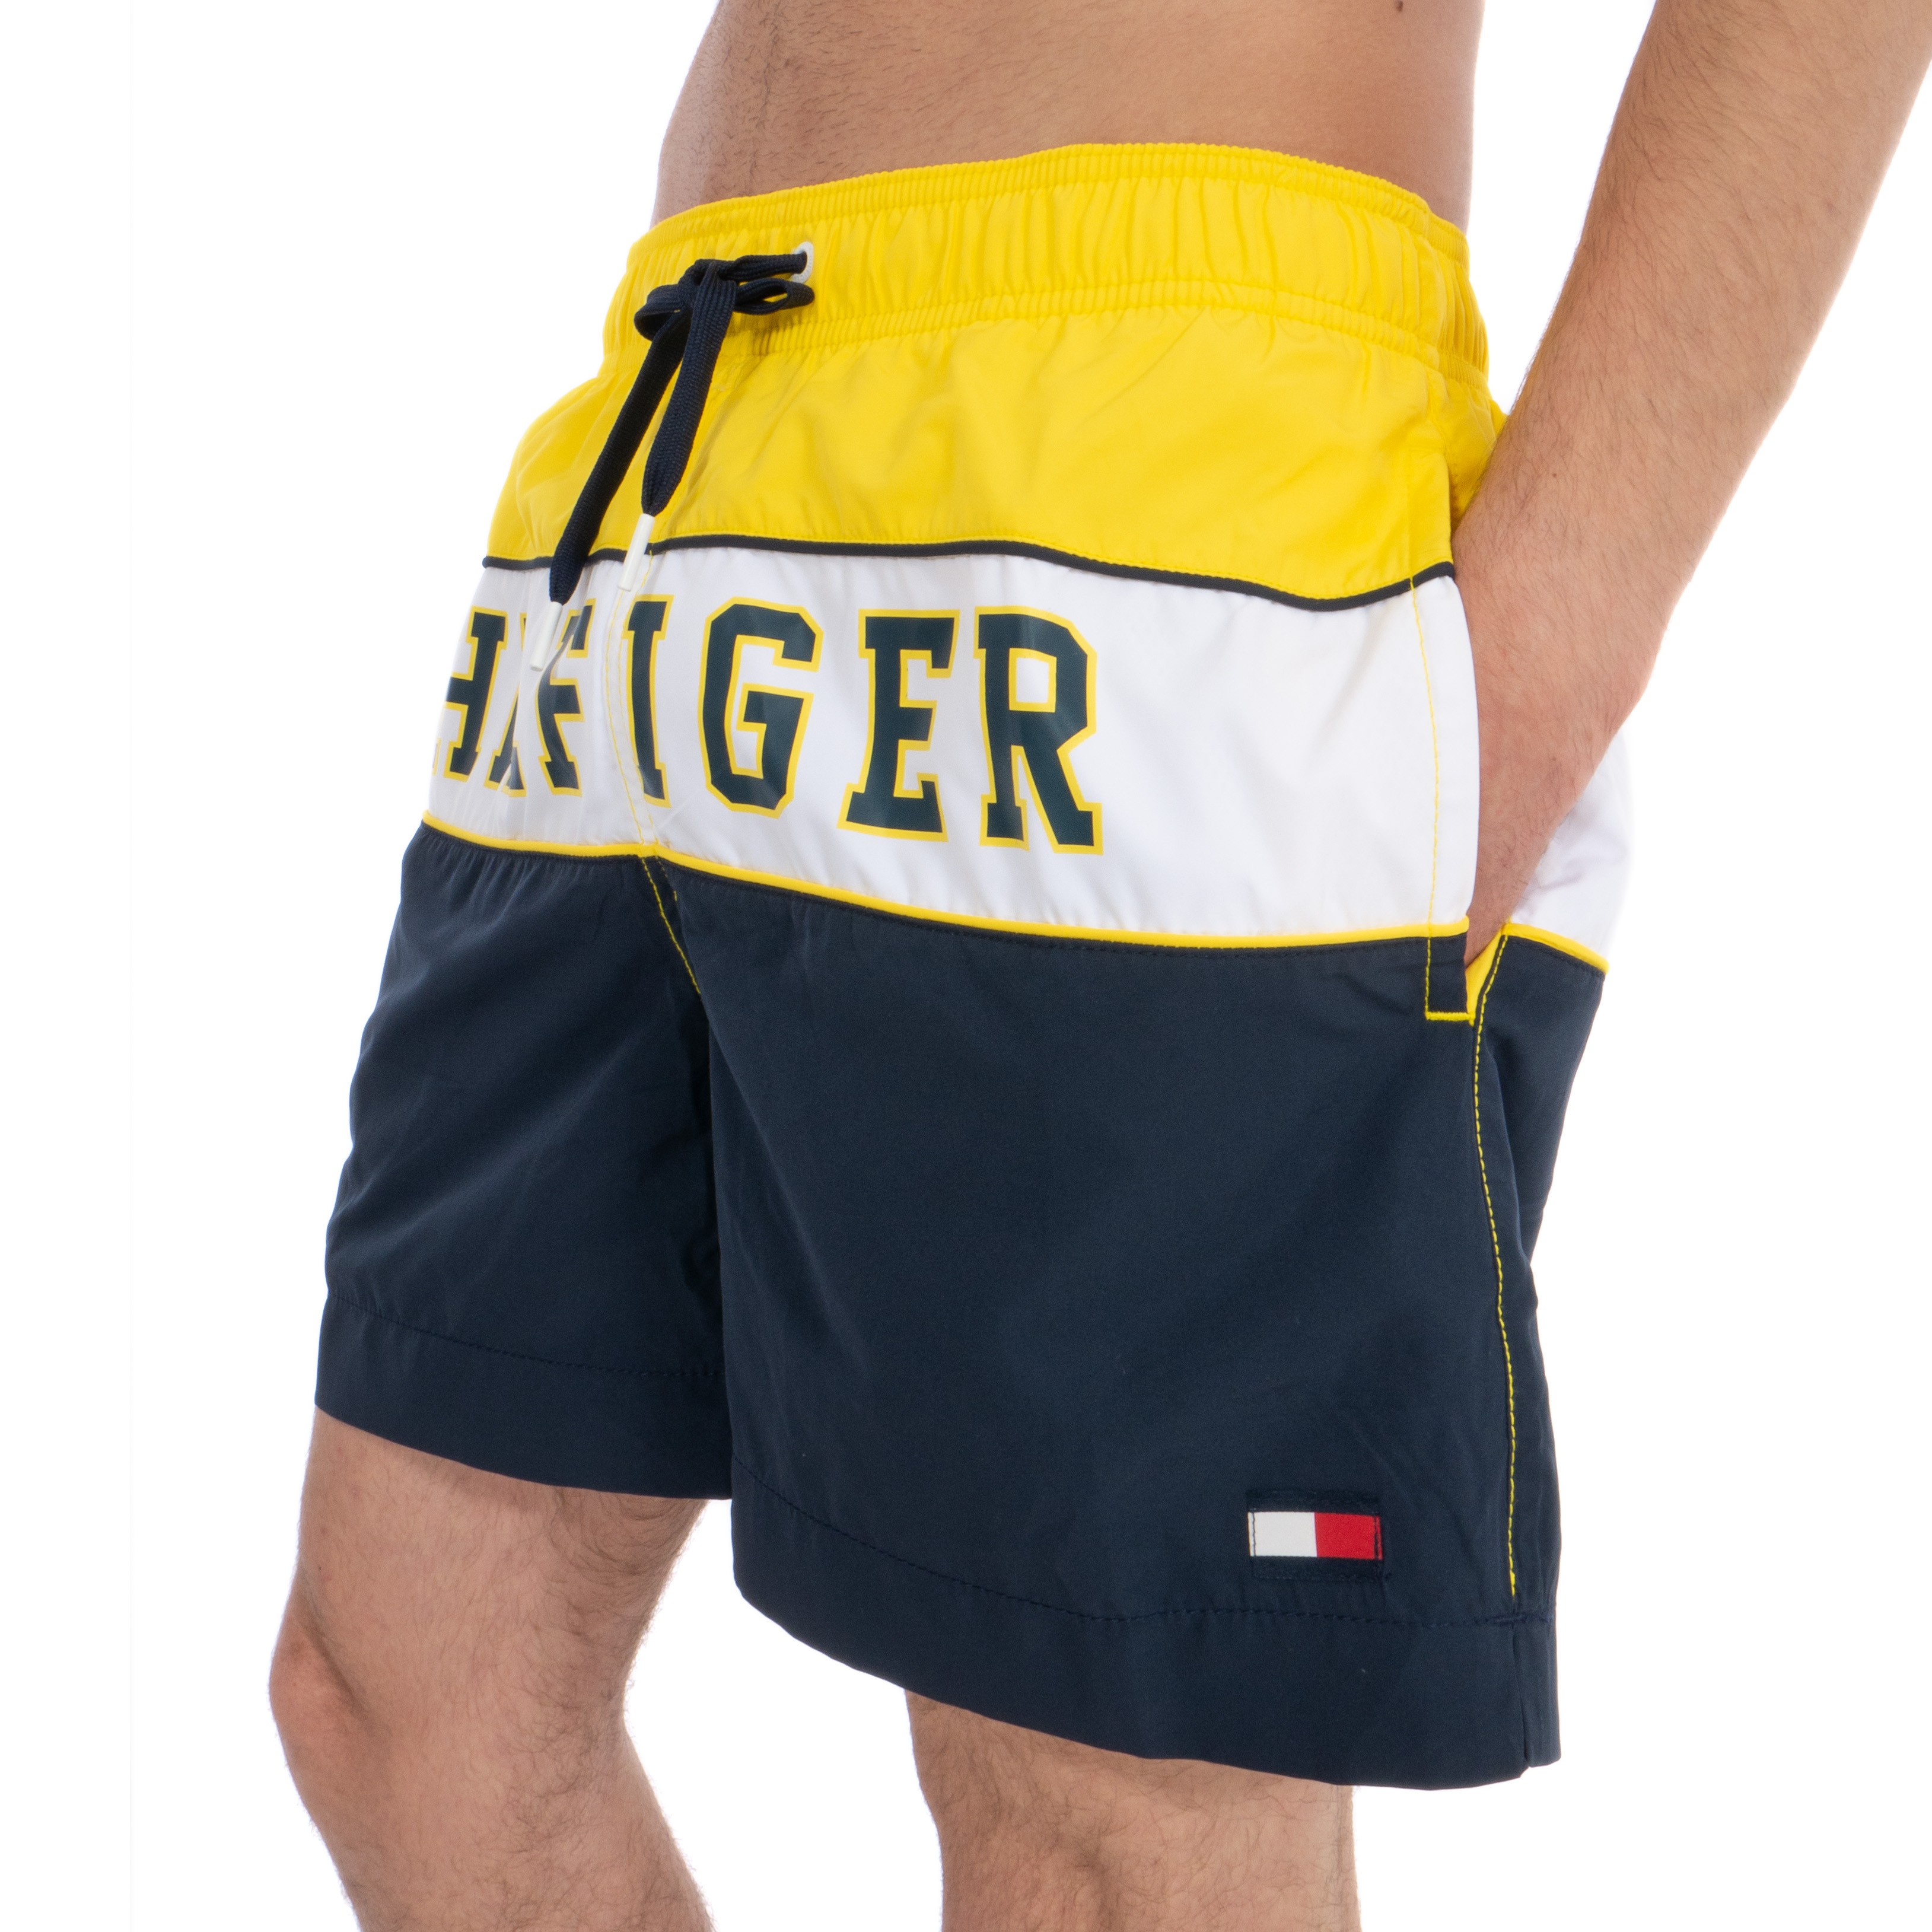 hilfiger swim shorts